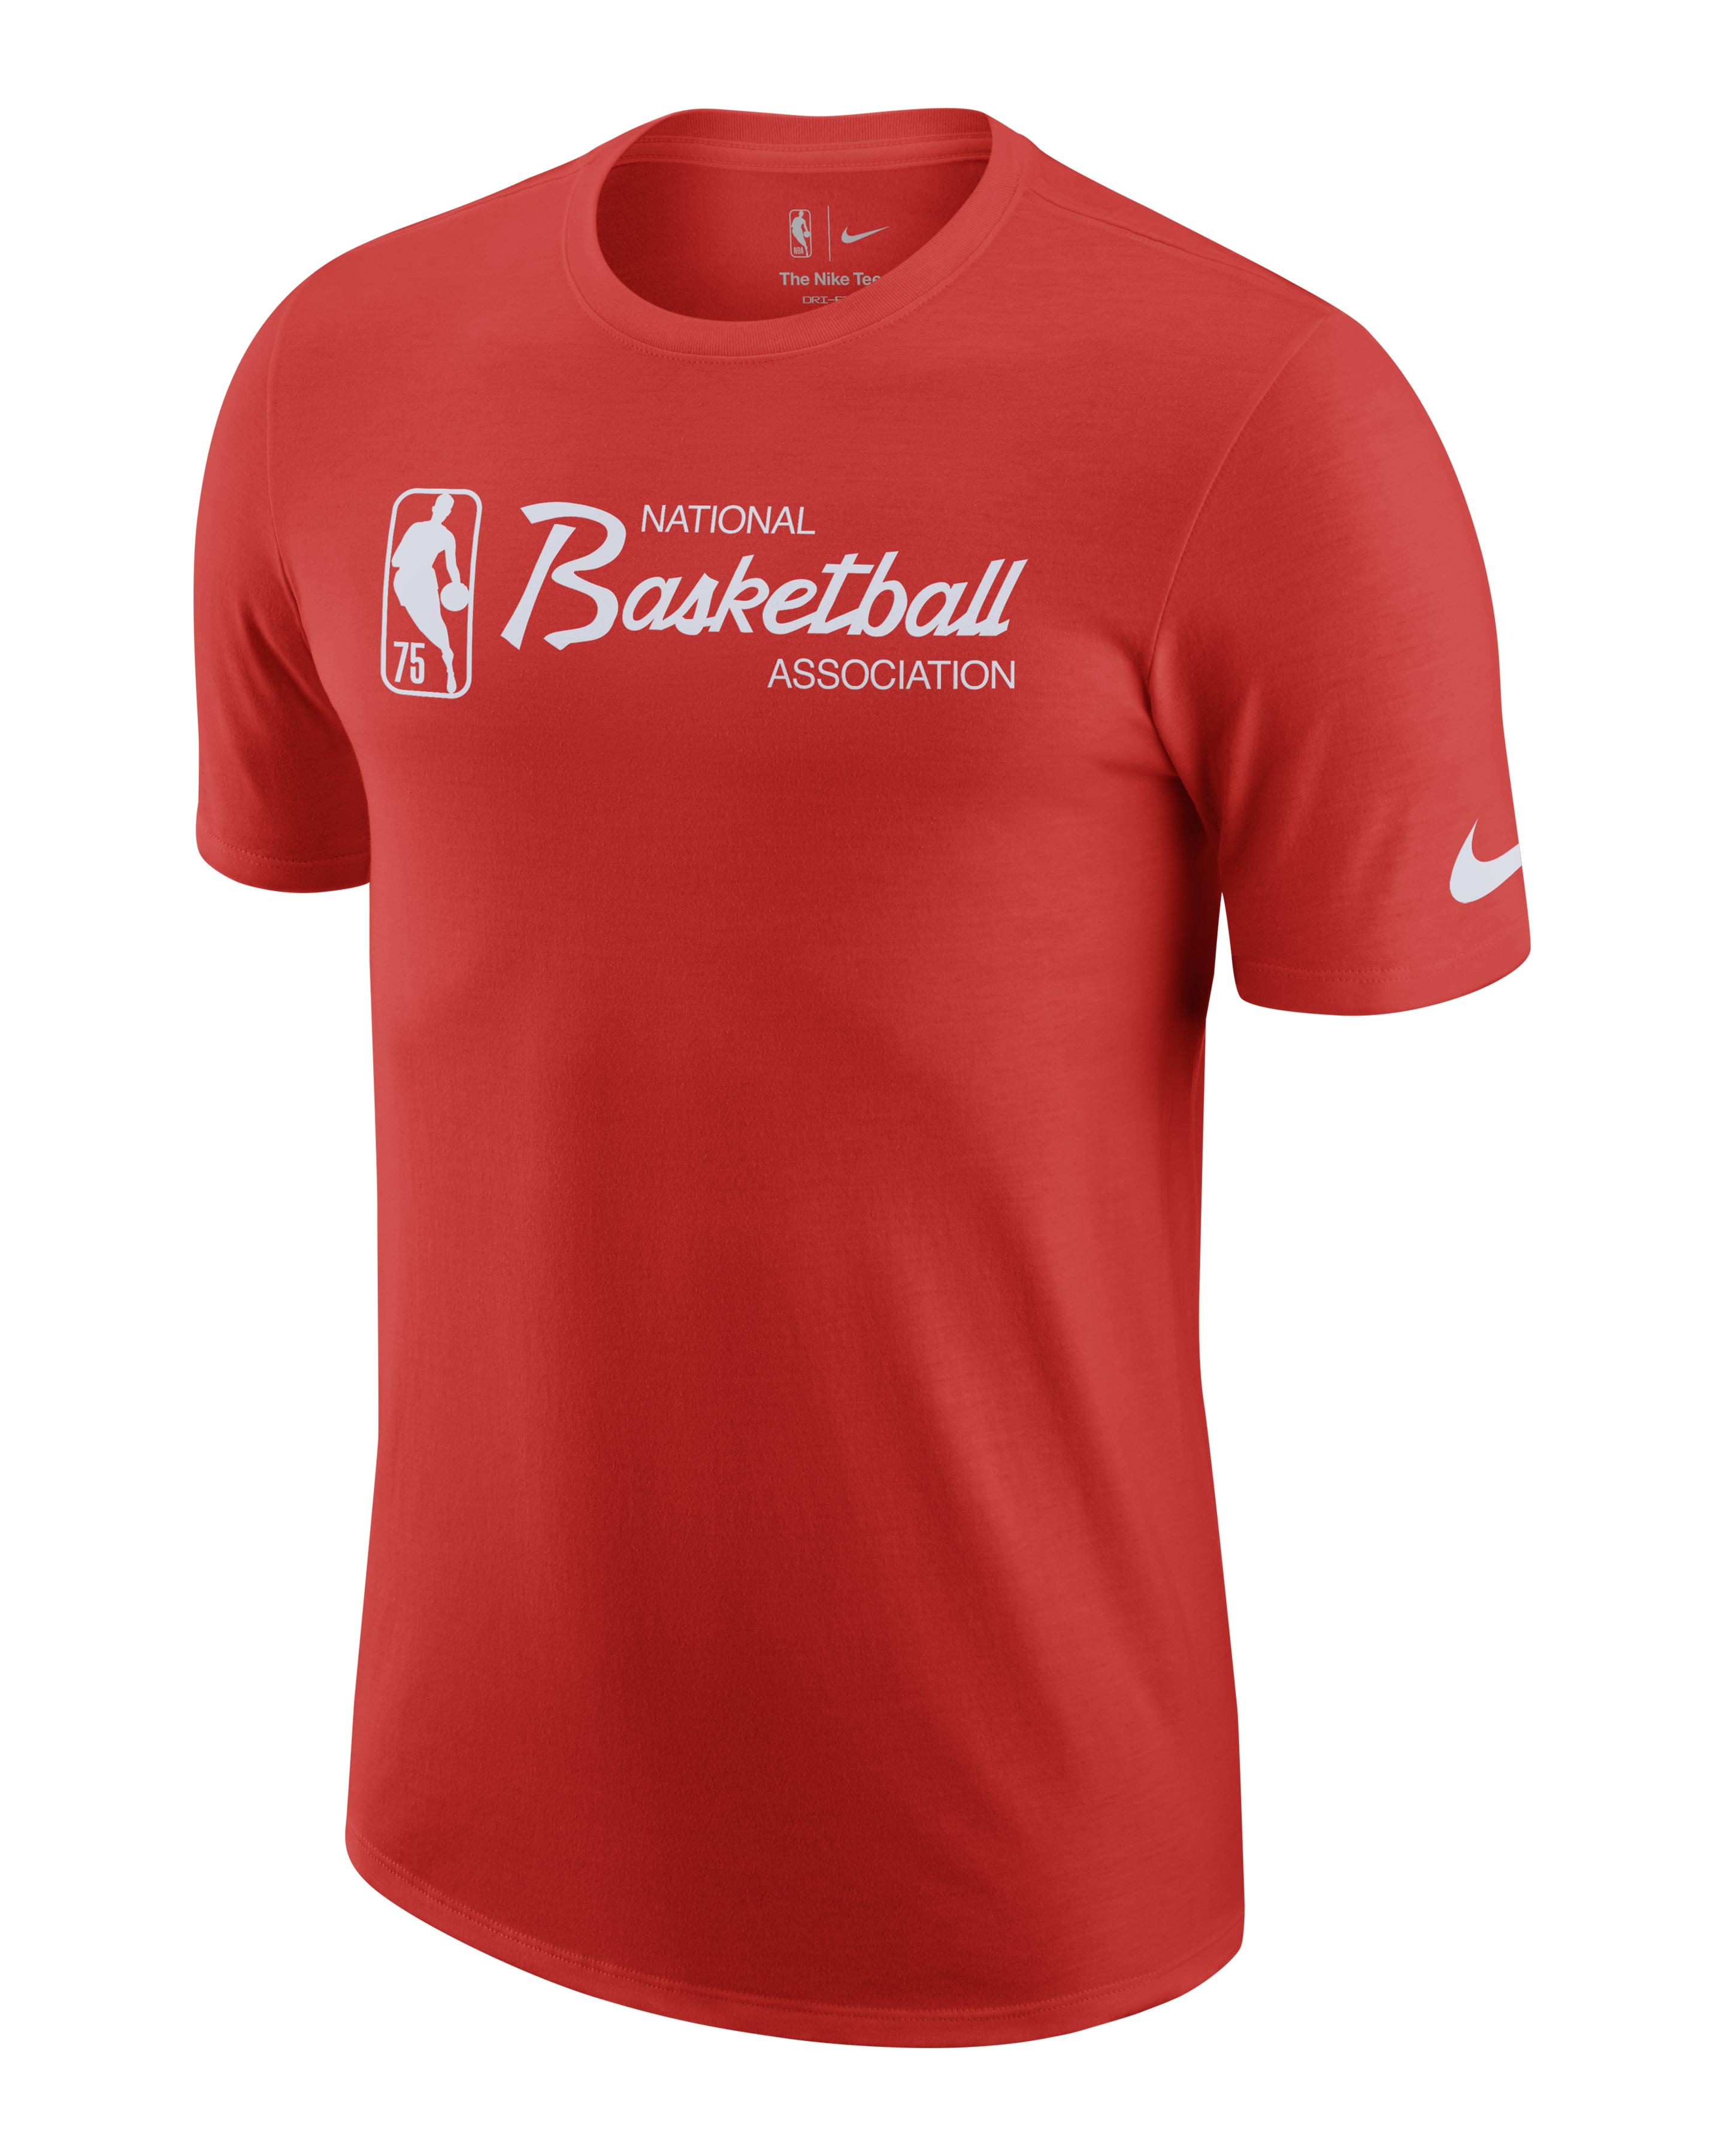 Team 31 Essential Men's Nike NBA T-Shirt